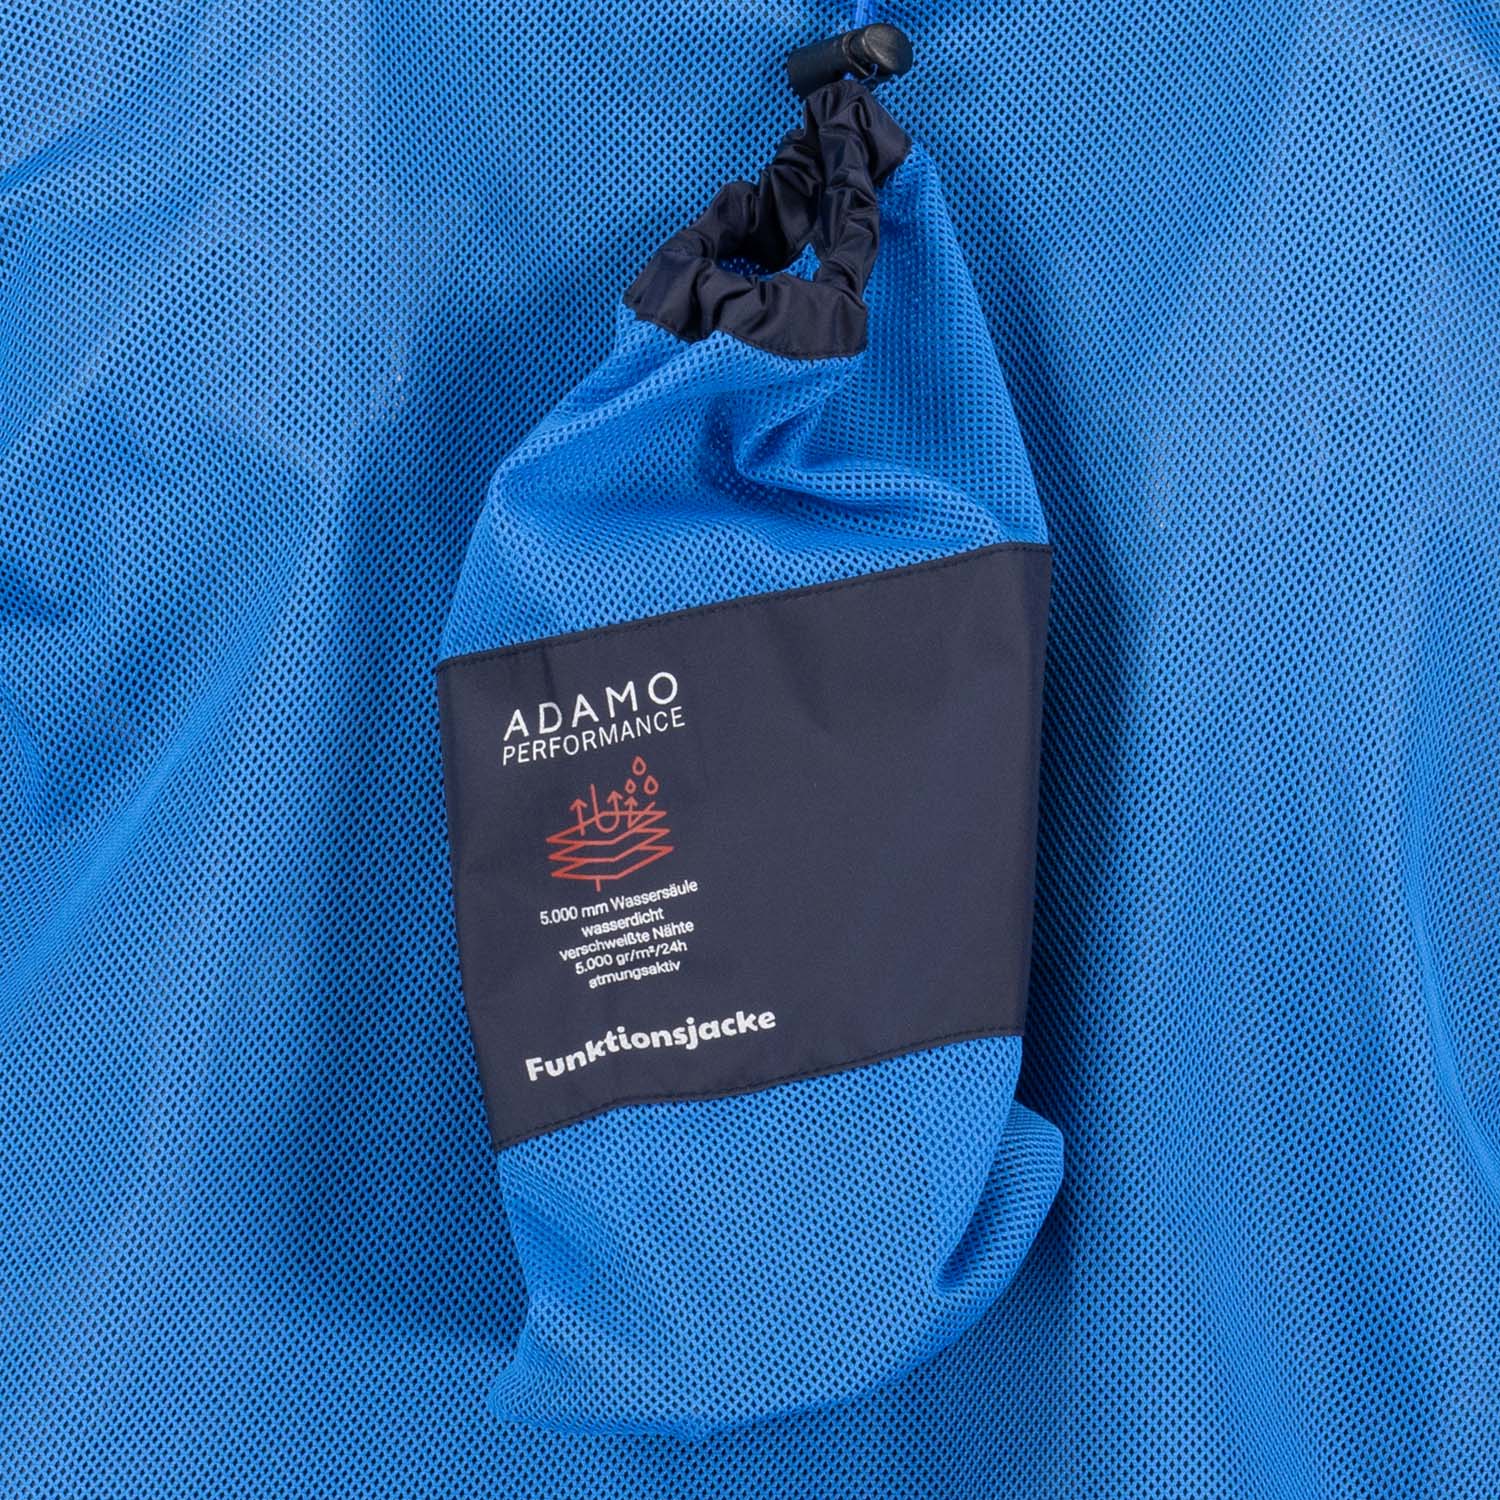 Men's rain jacket navy series London by ADAMO in oversizes up to 12XL